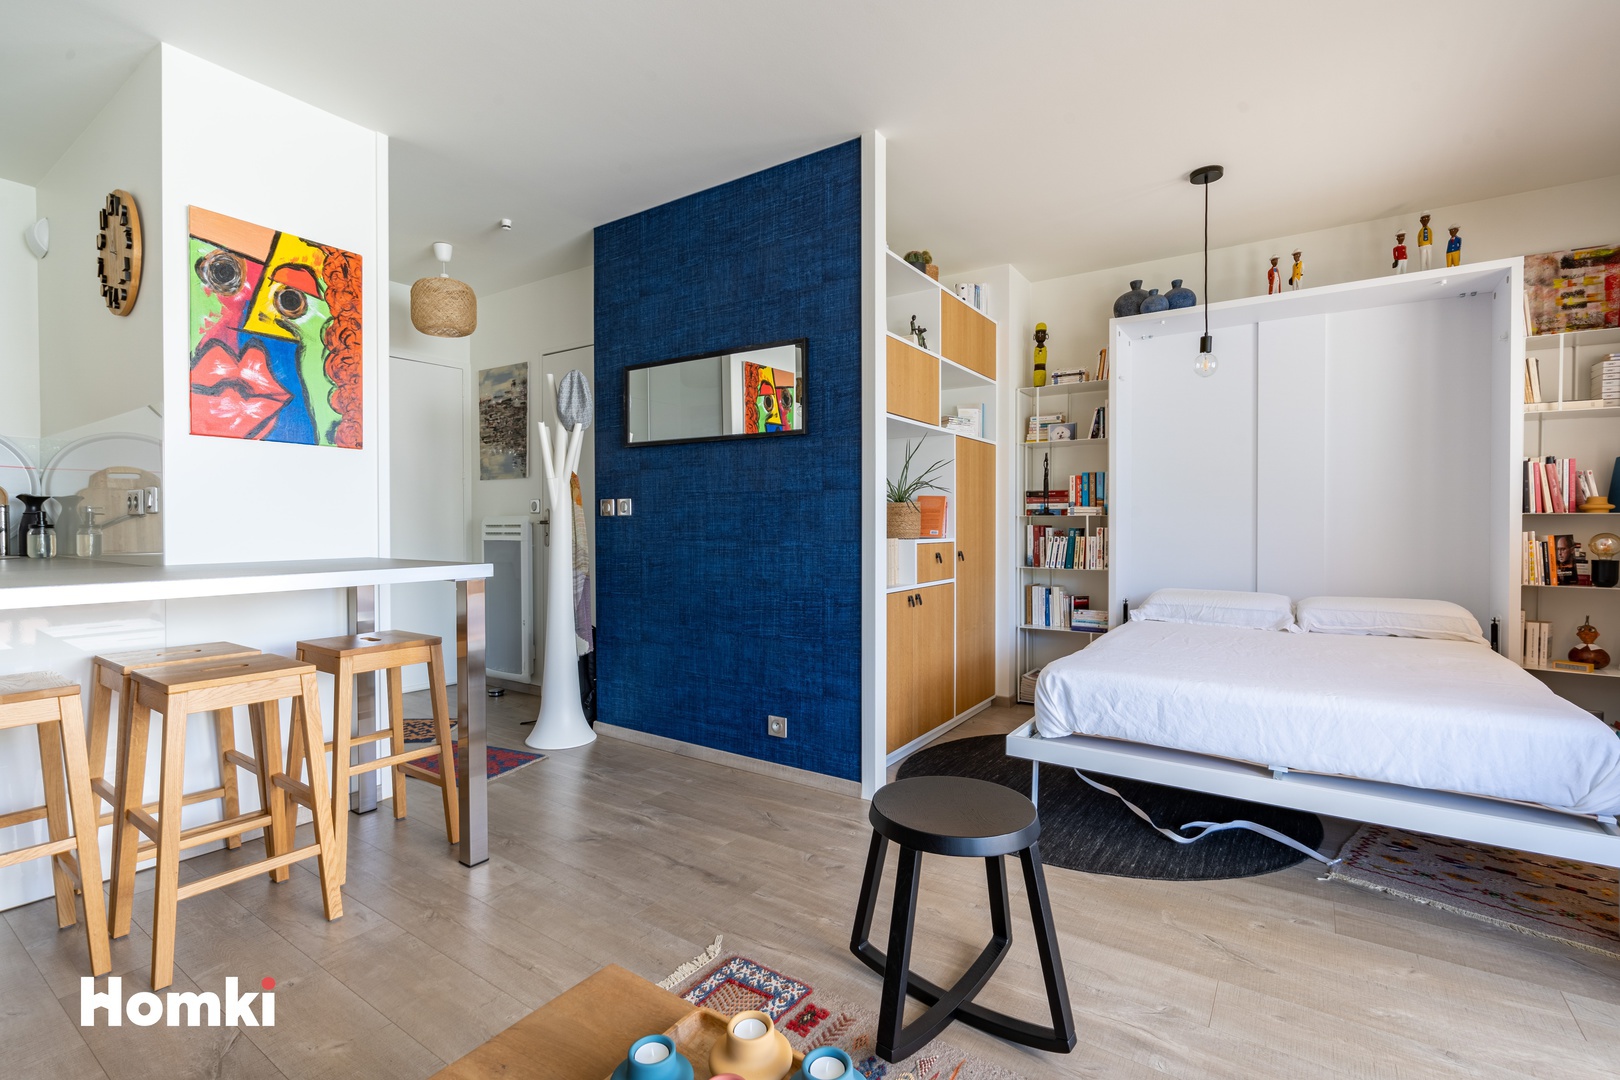 Homki - Vente Appartement  de 30.0 m² à Biarritz 64200